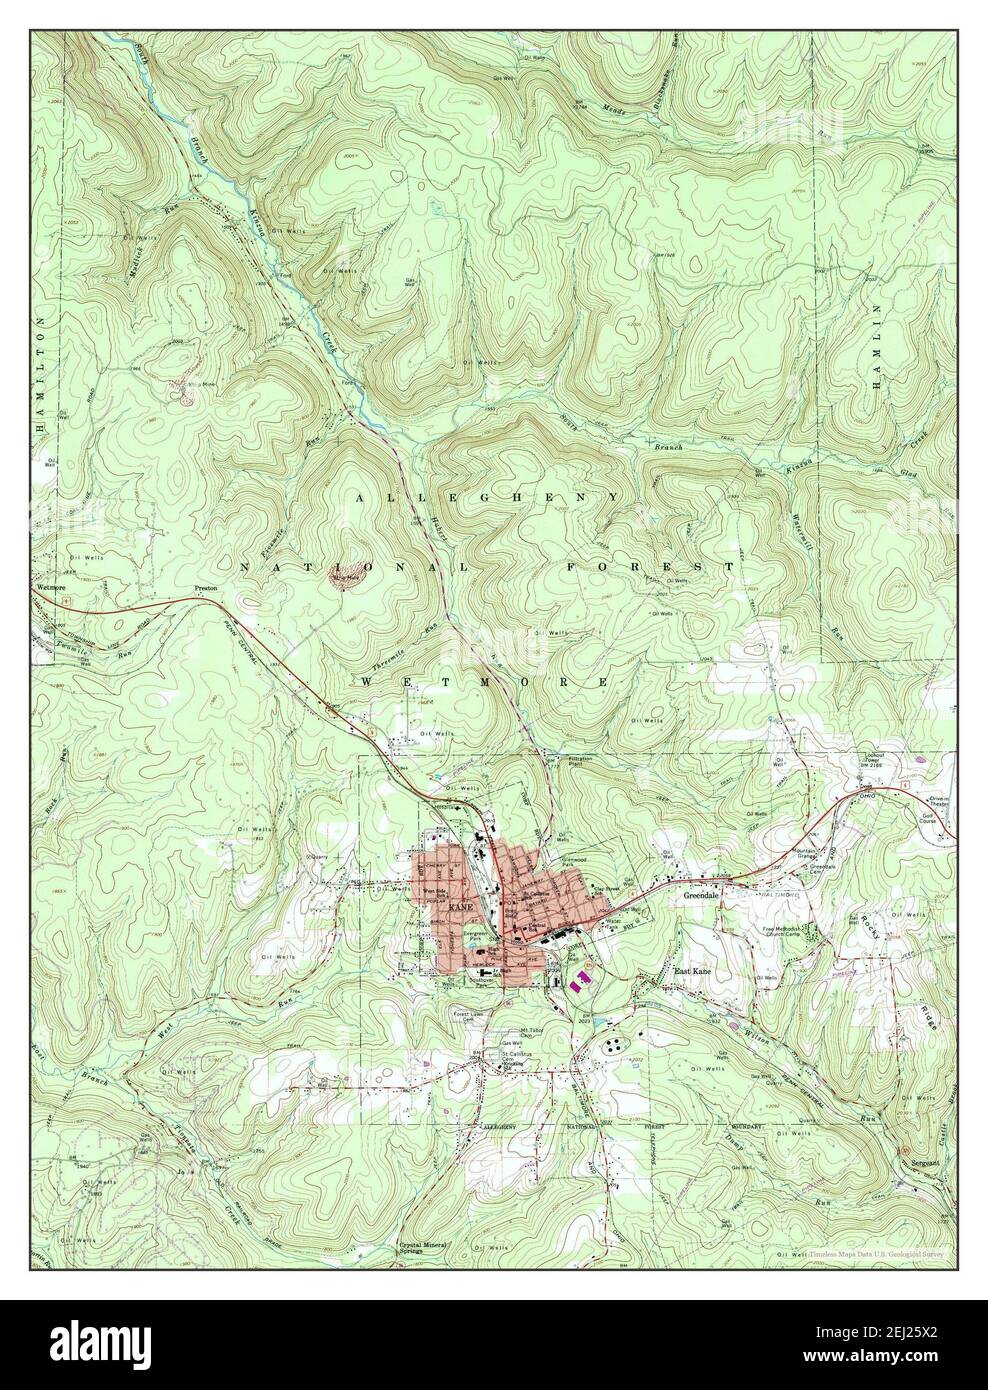 Kane, Pennsylvania, map 1966, 1:24000, United States of America by Timeless Maps, data U.S. Geological Survey Stock Photo